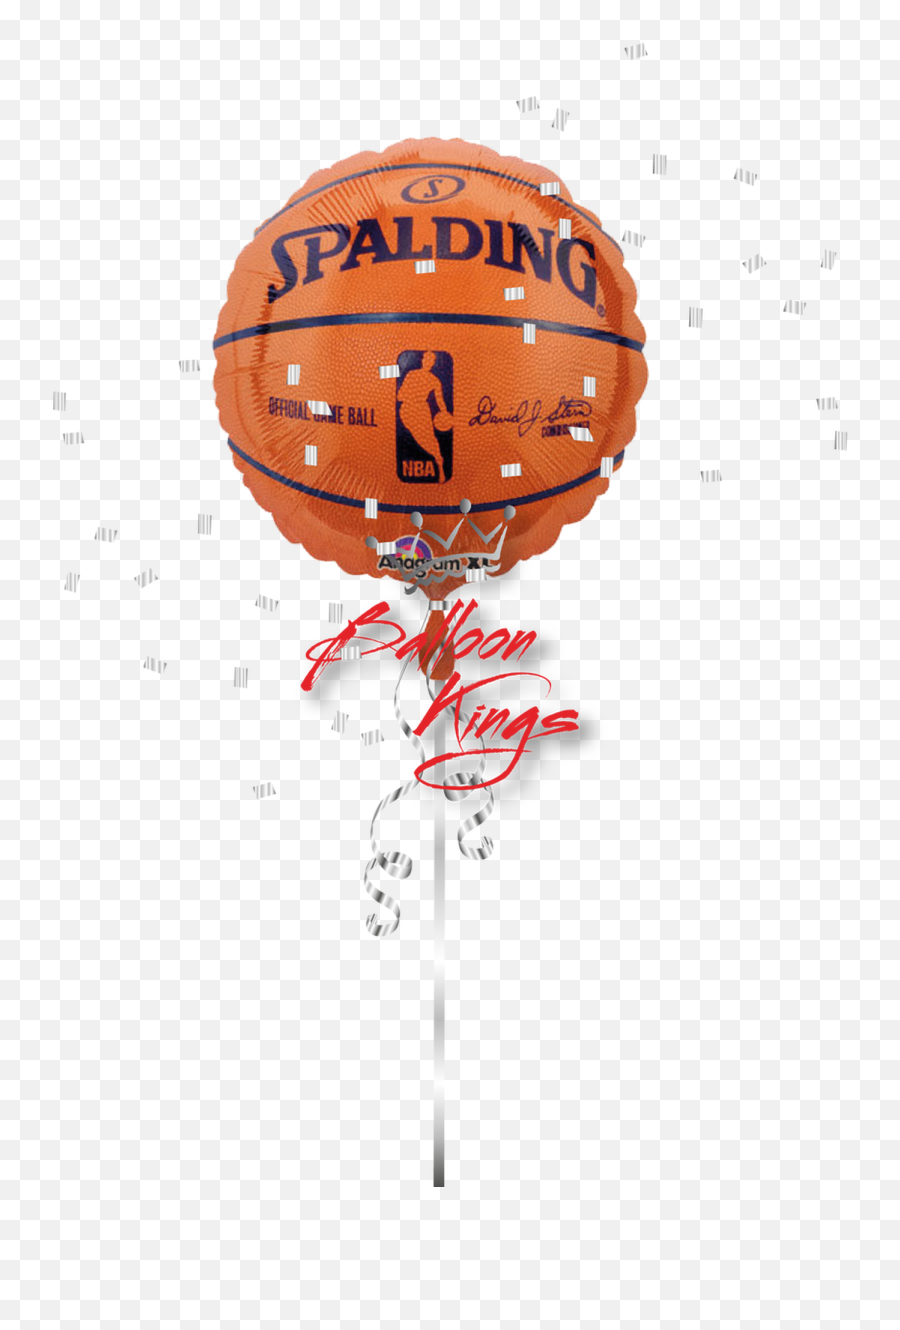 Spalding Basketball - Golden State Warriors Balloons Emoji,Basketball Emoji Png